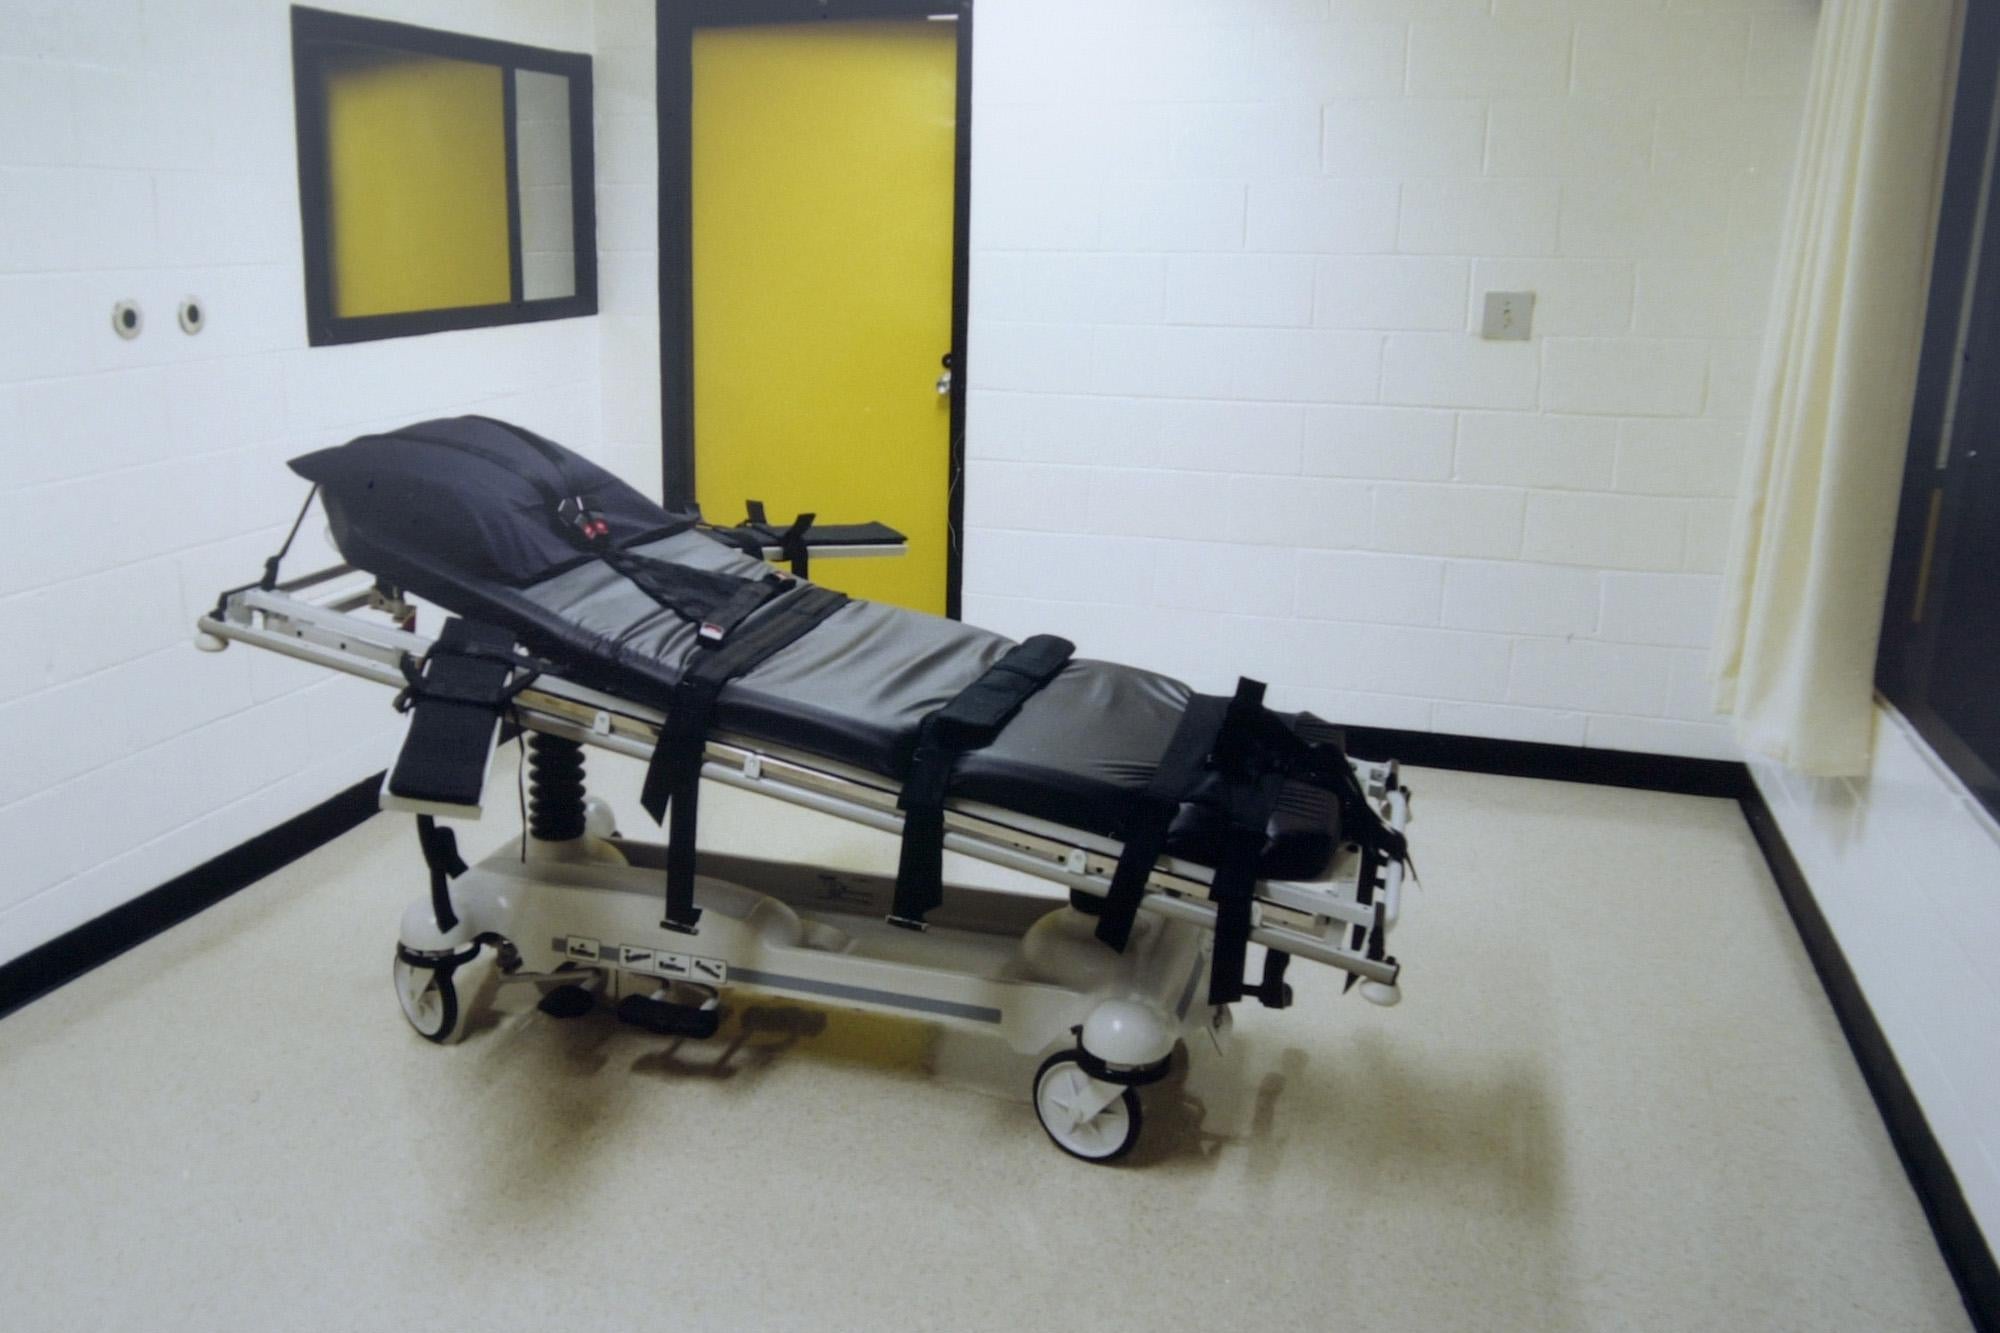 The death chamber at the Georgia Diagnostic Prison in Jackson, GA. 